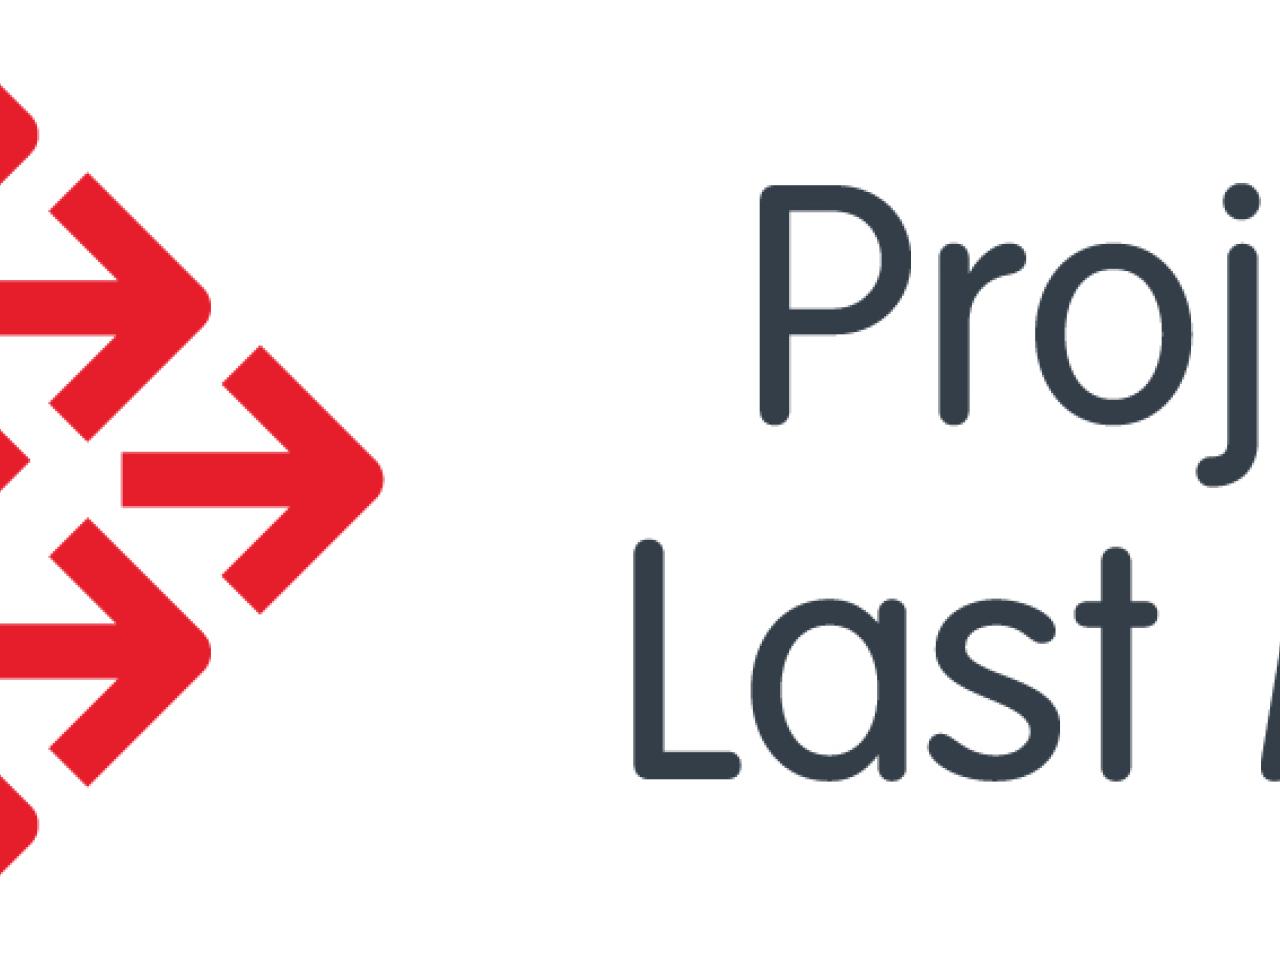 Project Last Mile logo